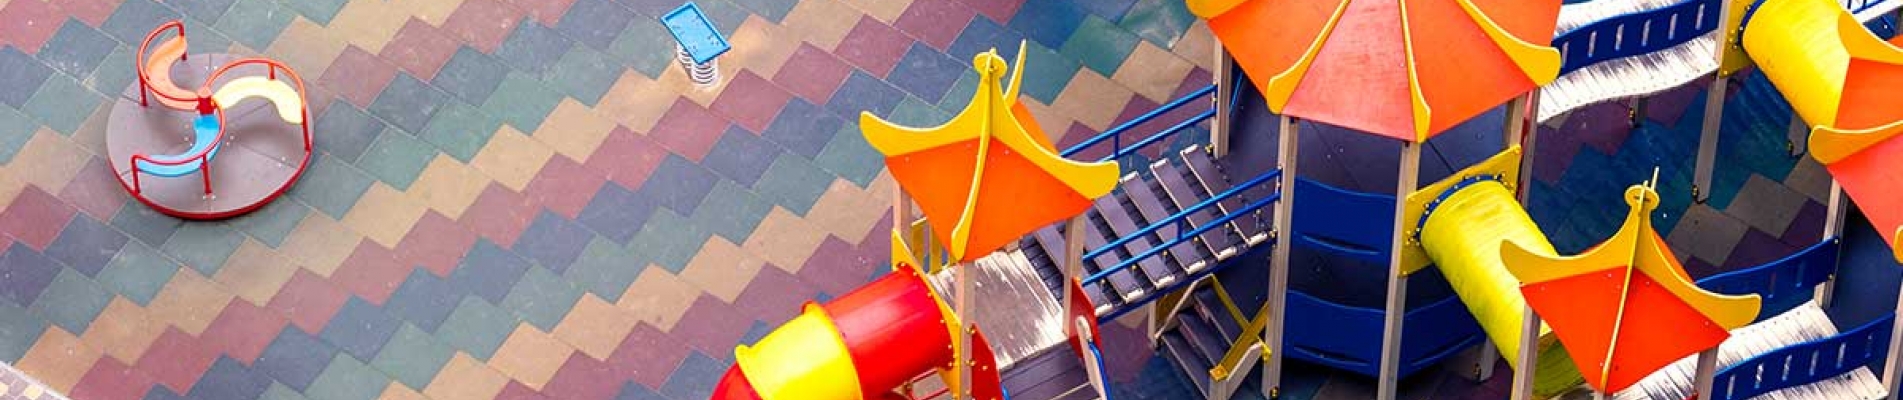 Intego Playground بناء ملعب للأطفال